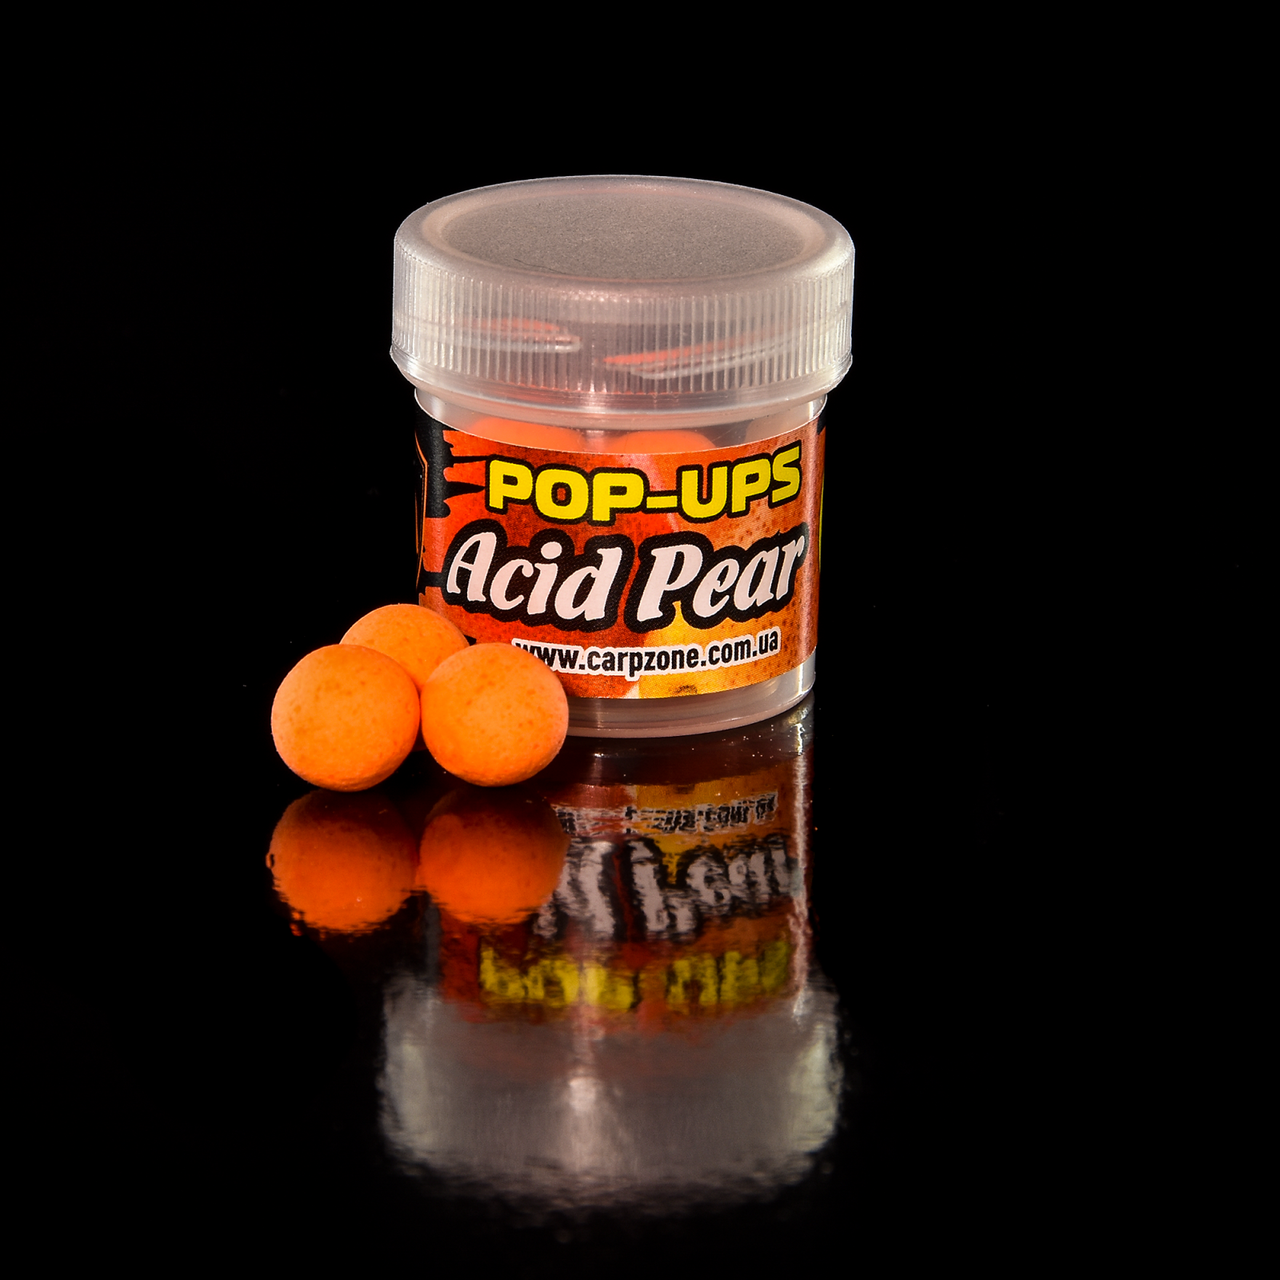 Поп Ап Pop-Ups Fluro Acid Pear (Кислая Груша) 11mm/10pc